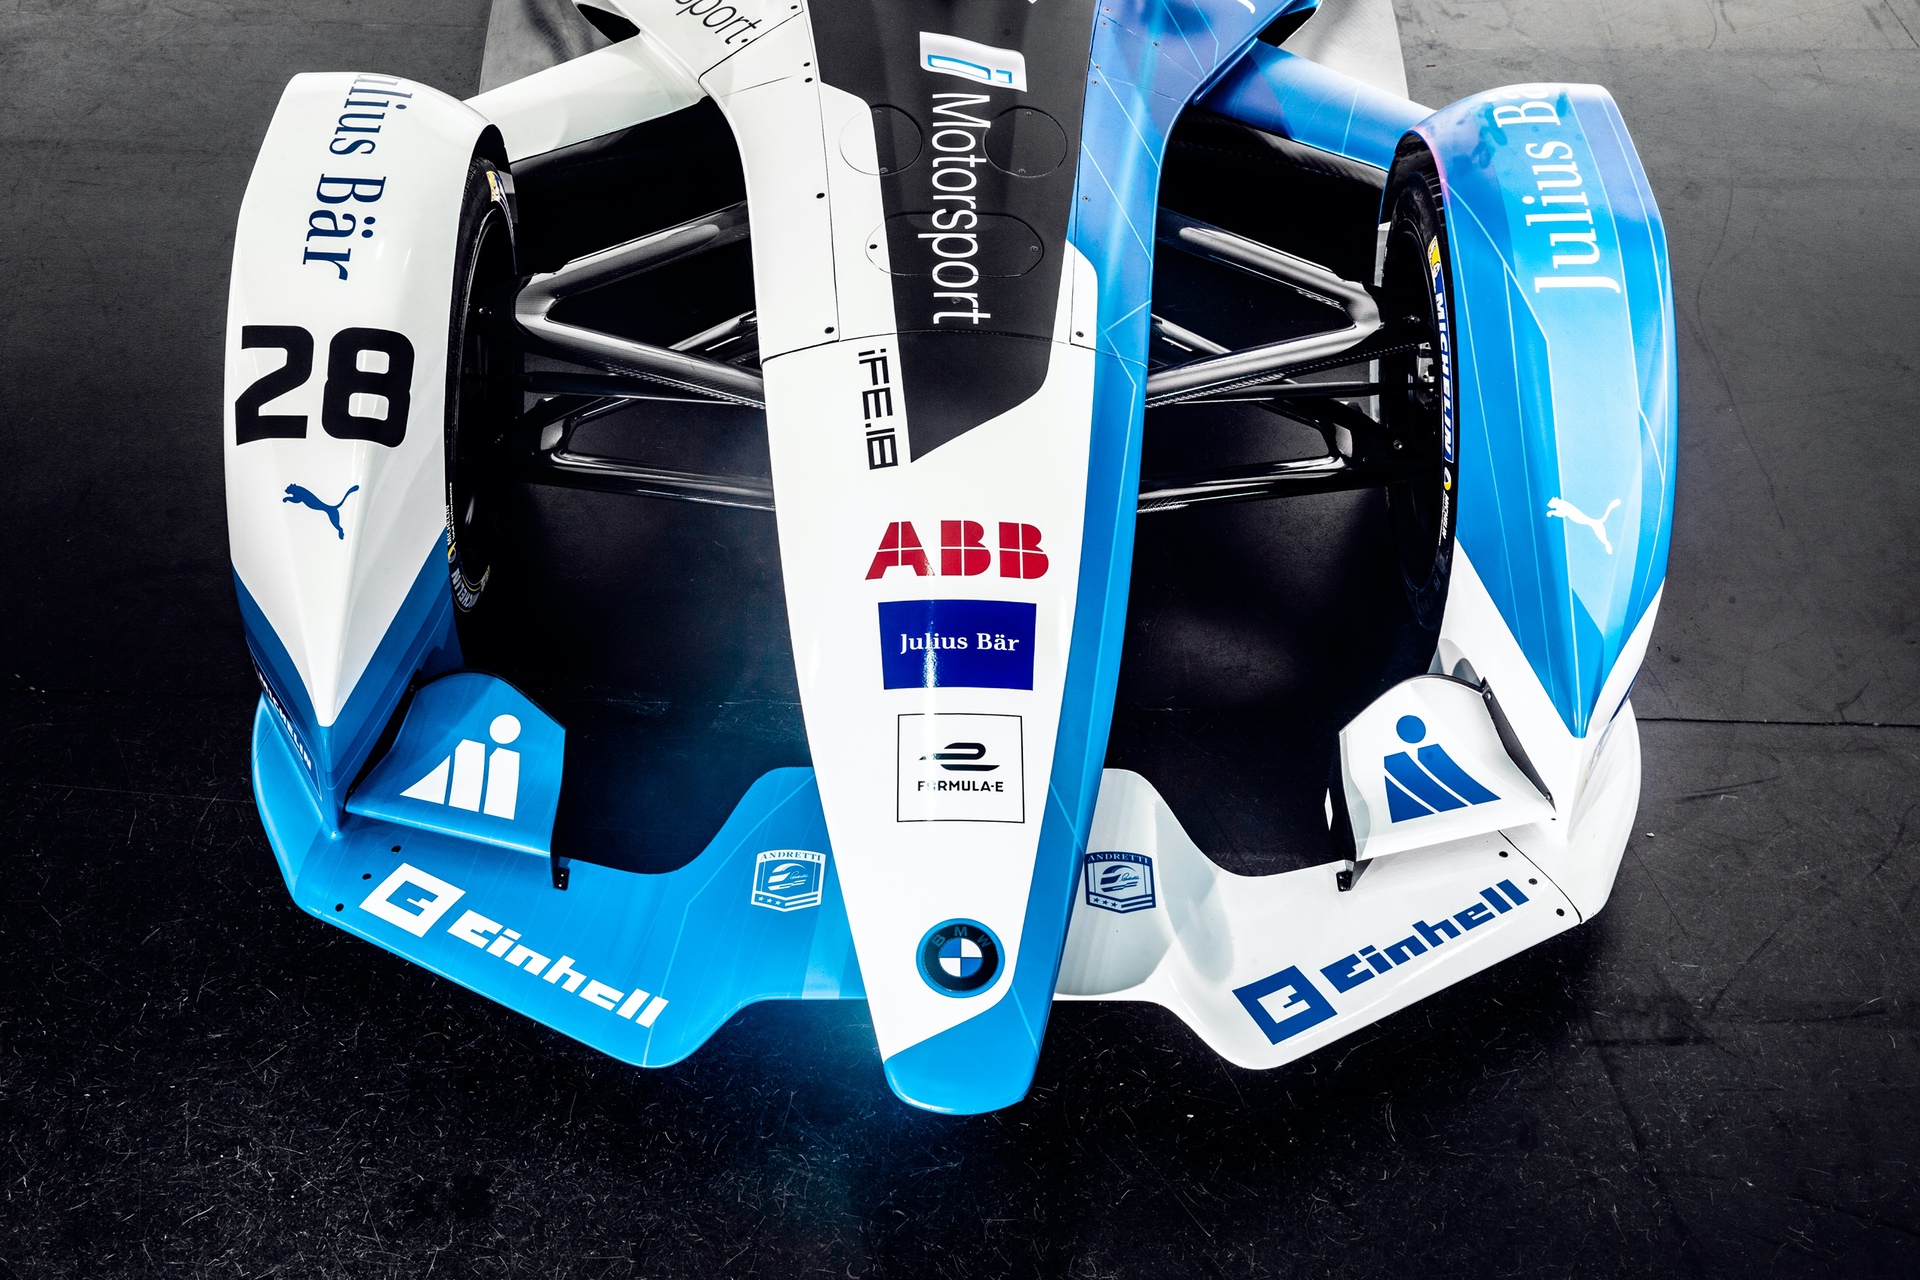 The new BMW iFE.18 for the ABB FIA Formula E Championship (09/18).